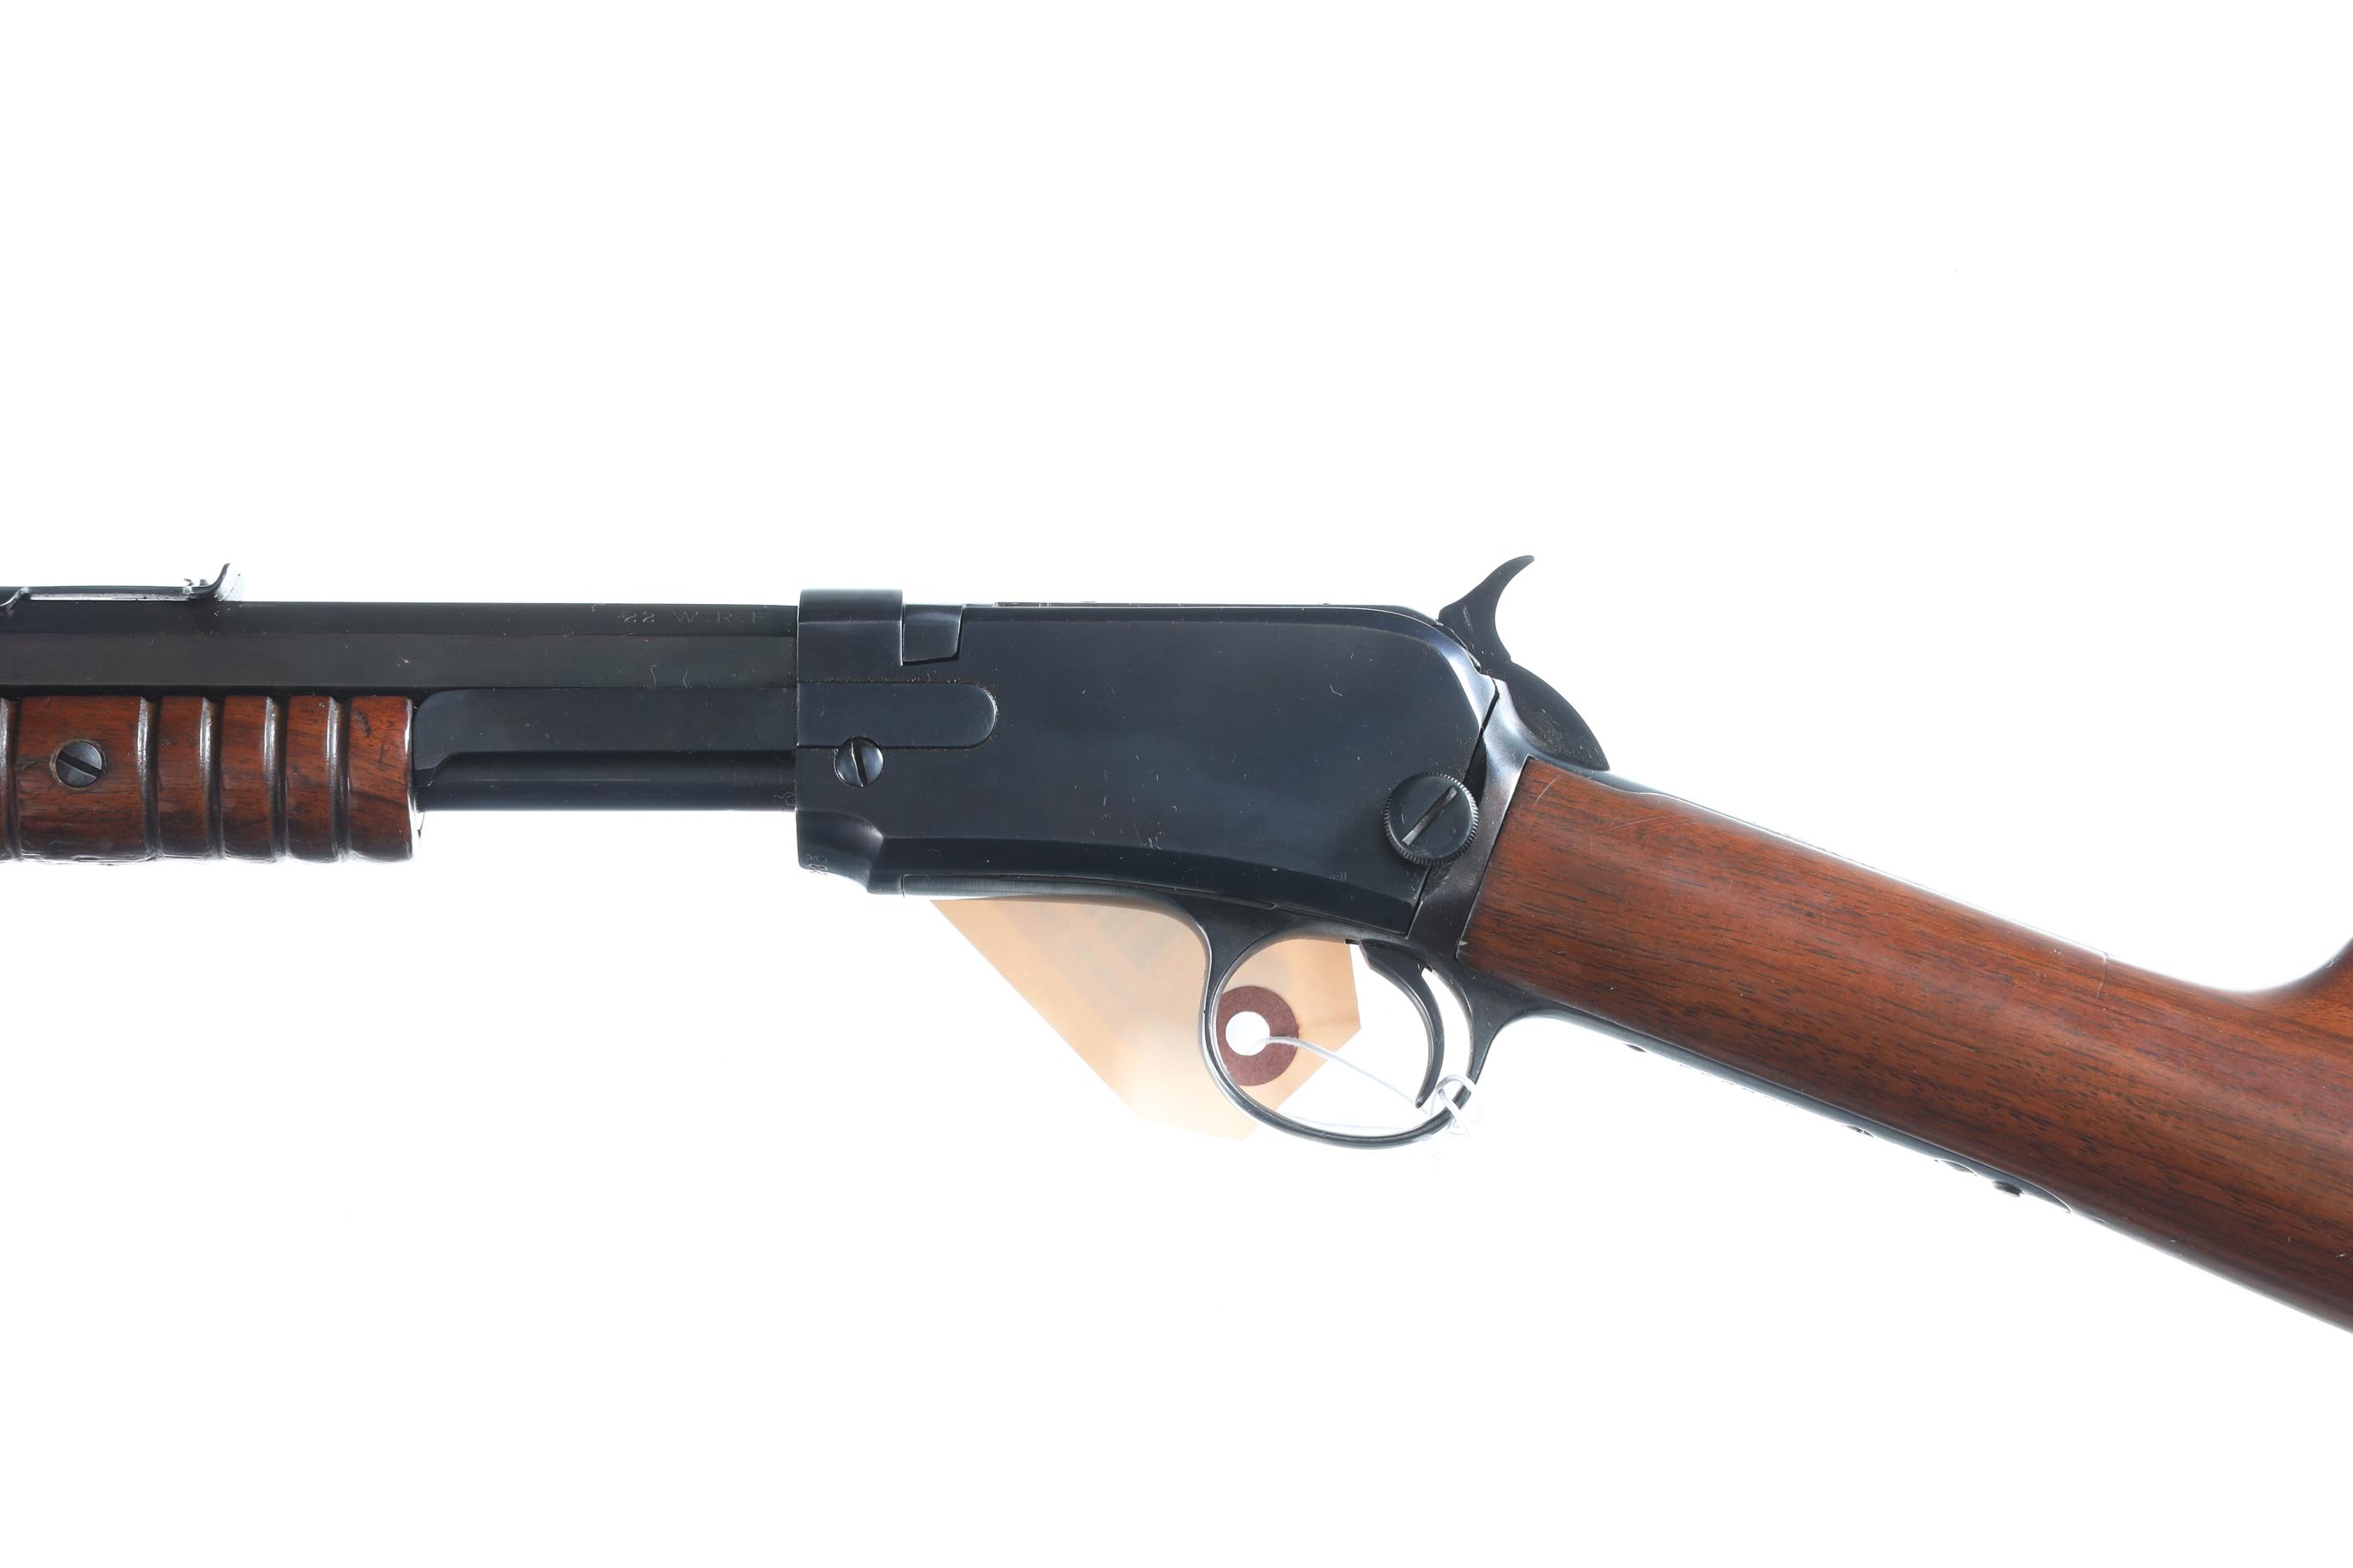 Winchester 1890 Slide Rifle .22 WRF